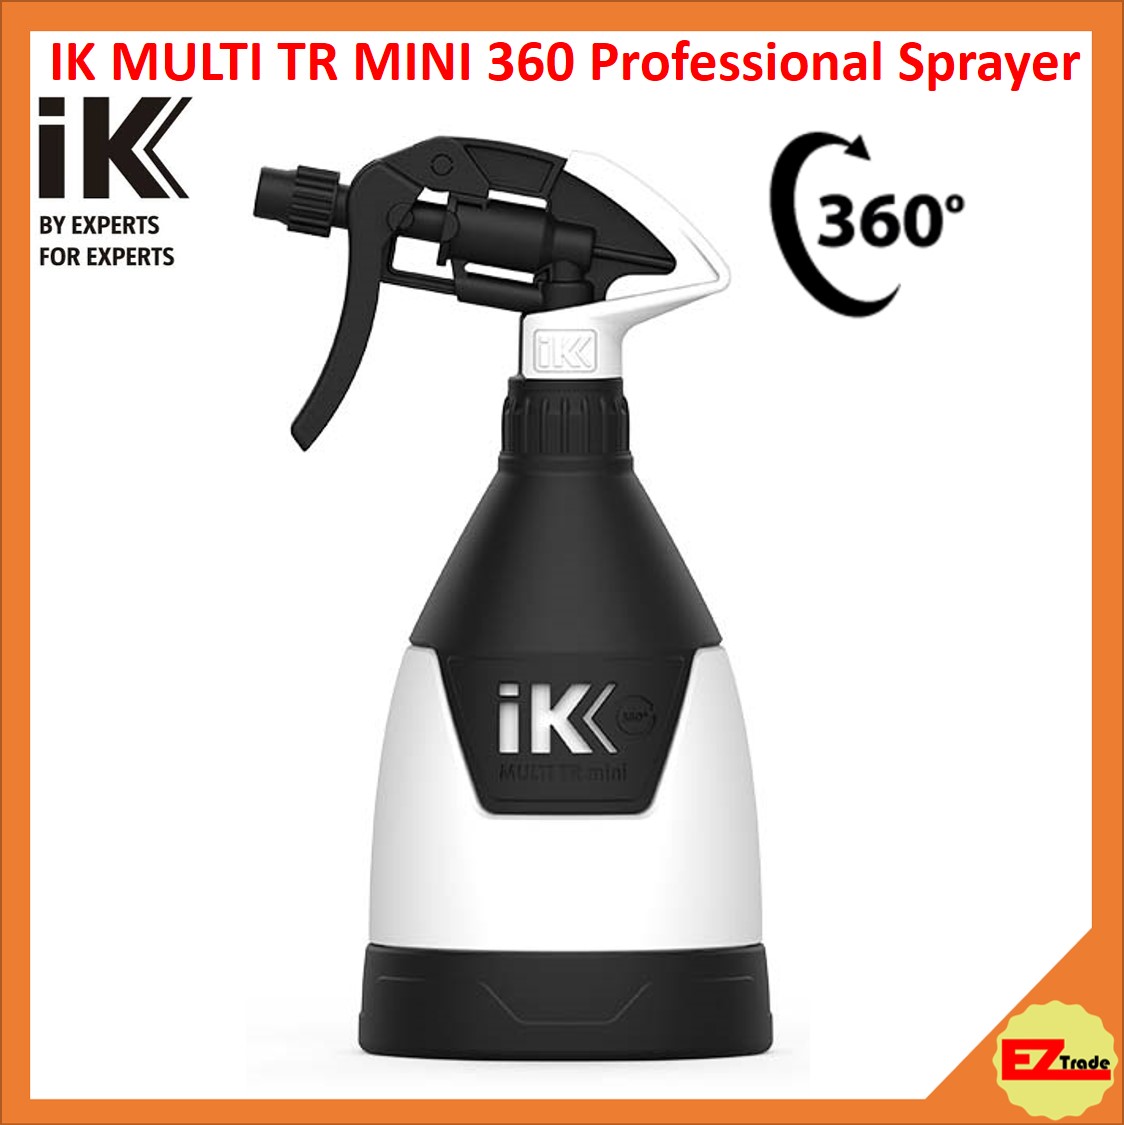 IK Multi TR 1 Replacement Trigger Sprayer